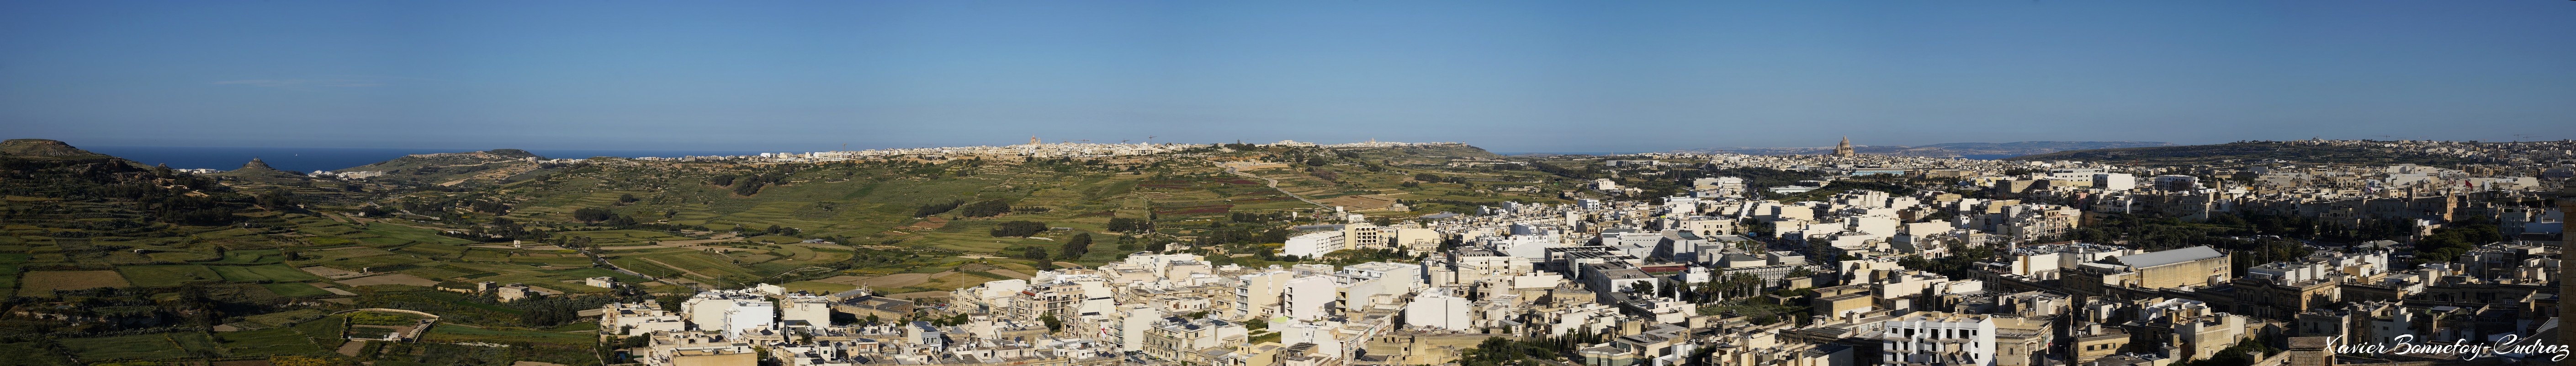 Gozo - Rabat (Victoria) - Panorama from the Cittadella
Mots-clés: geo:lat=36.04717051 geo:lon=14.23994757 geotagged Malte MLT Victoria Malta Gozo Rabat Cittadella panorama